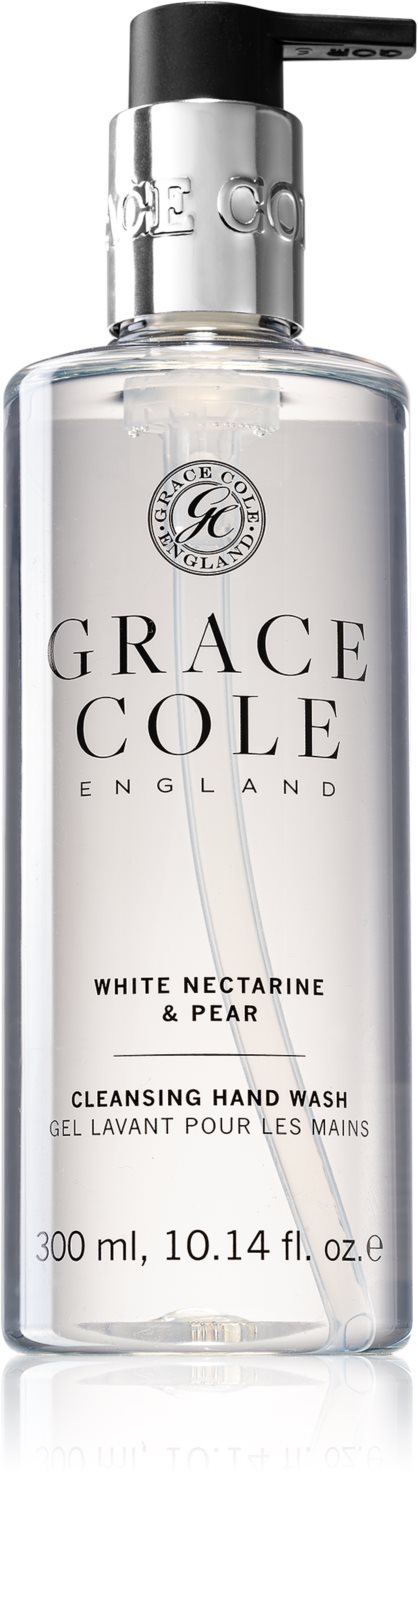 GRACE COLE: White Nectarine & Pear